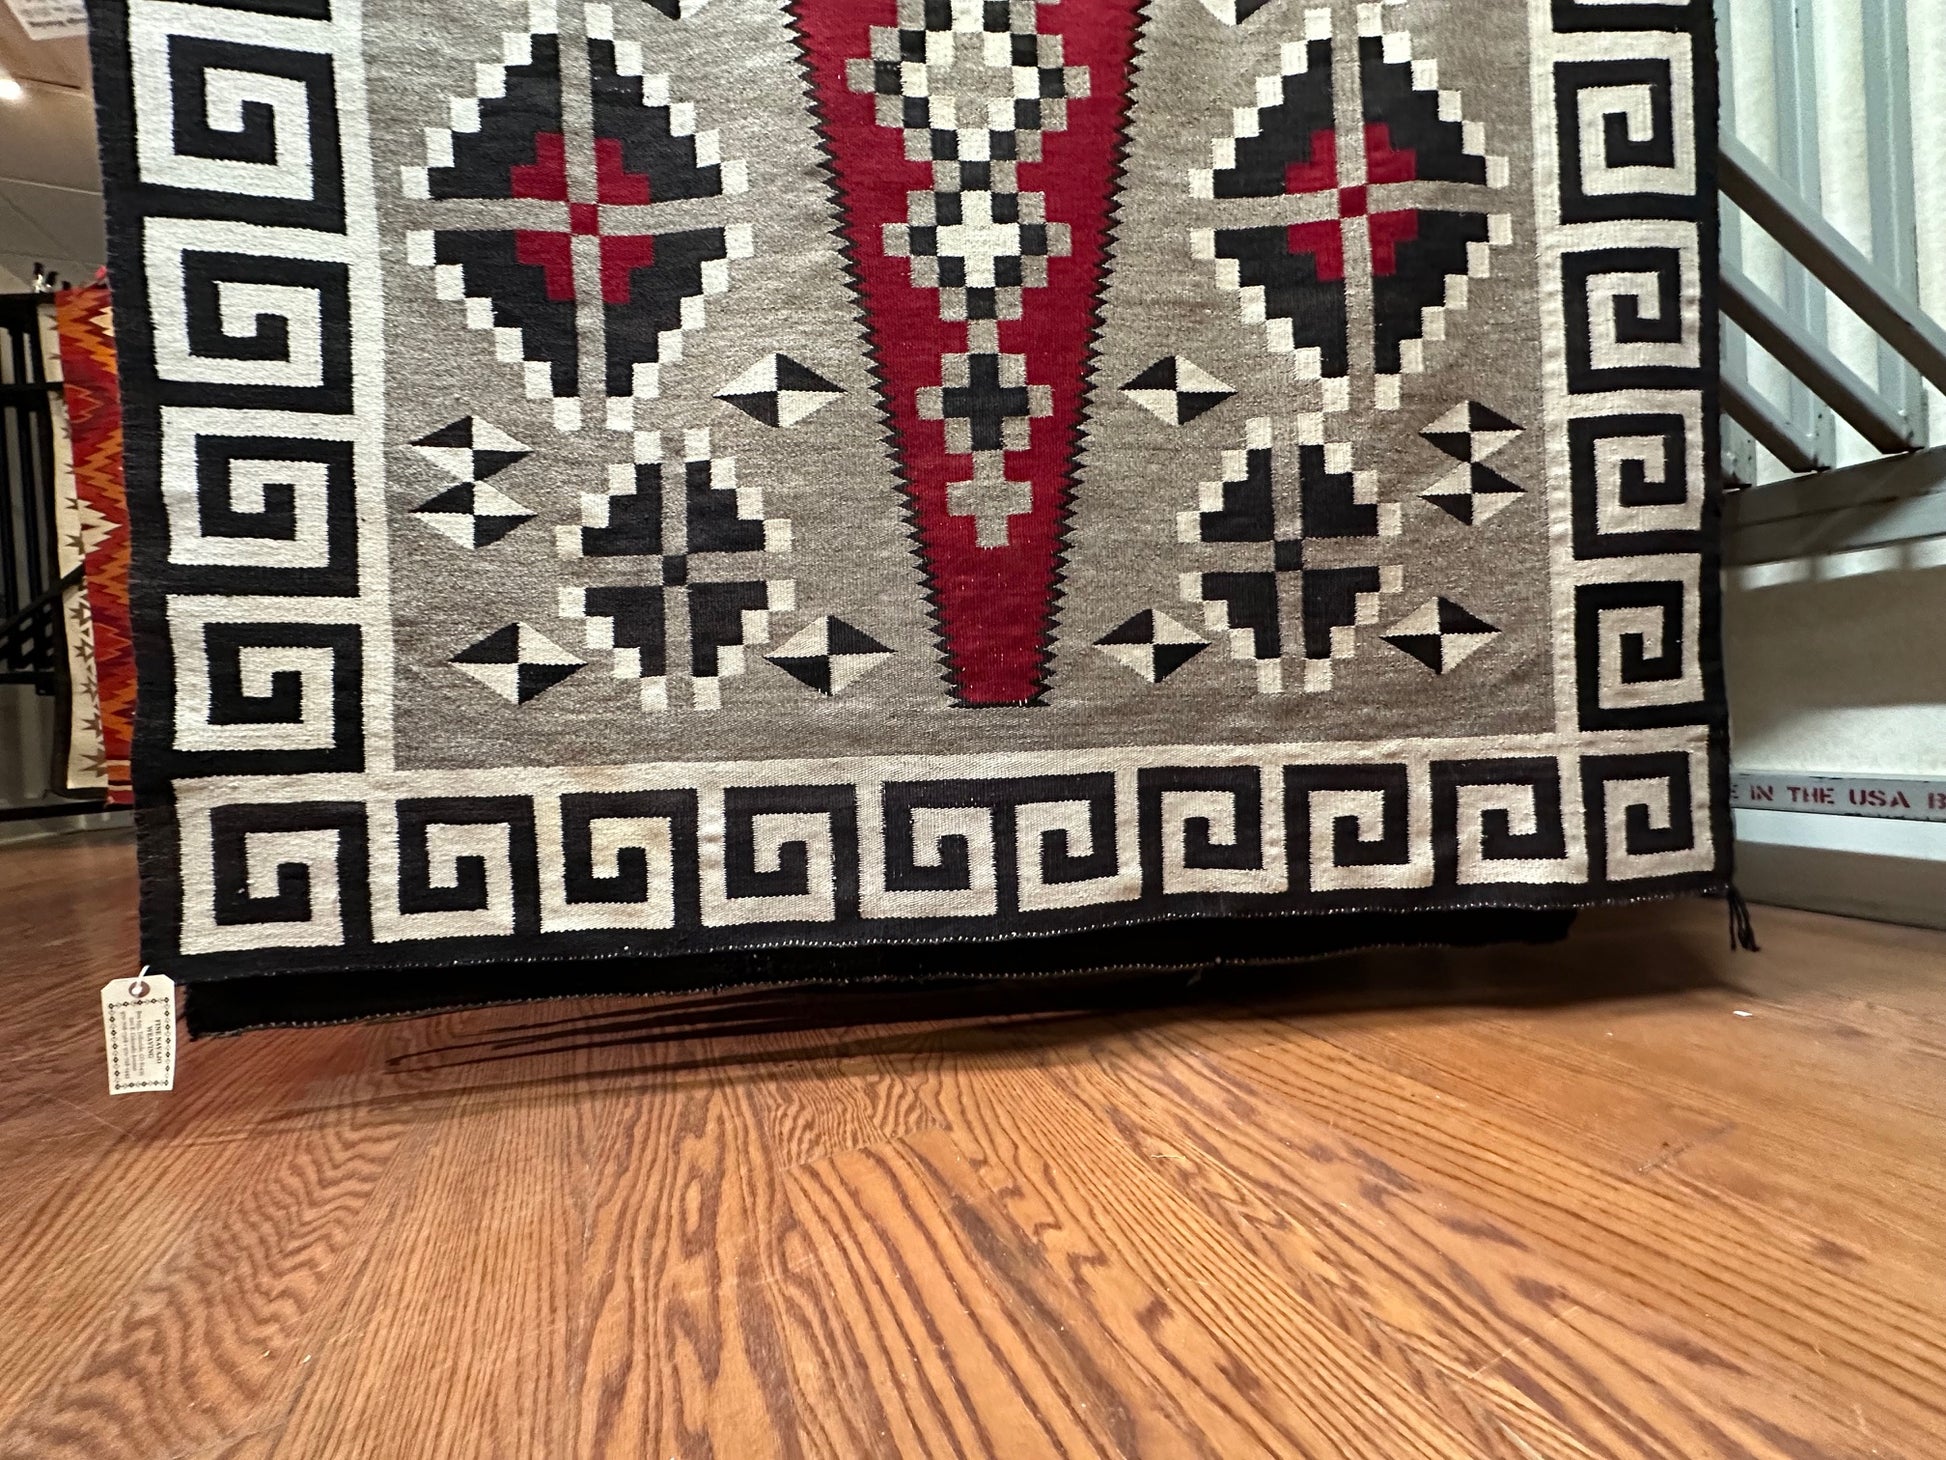 Antique Klagetoh Navajo rug for sale, klagetoh weaving for sale, telluride gallery 